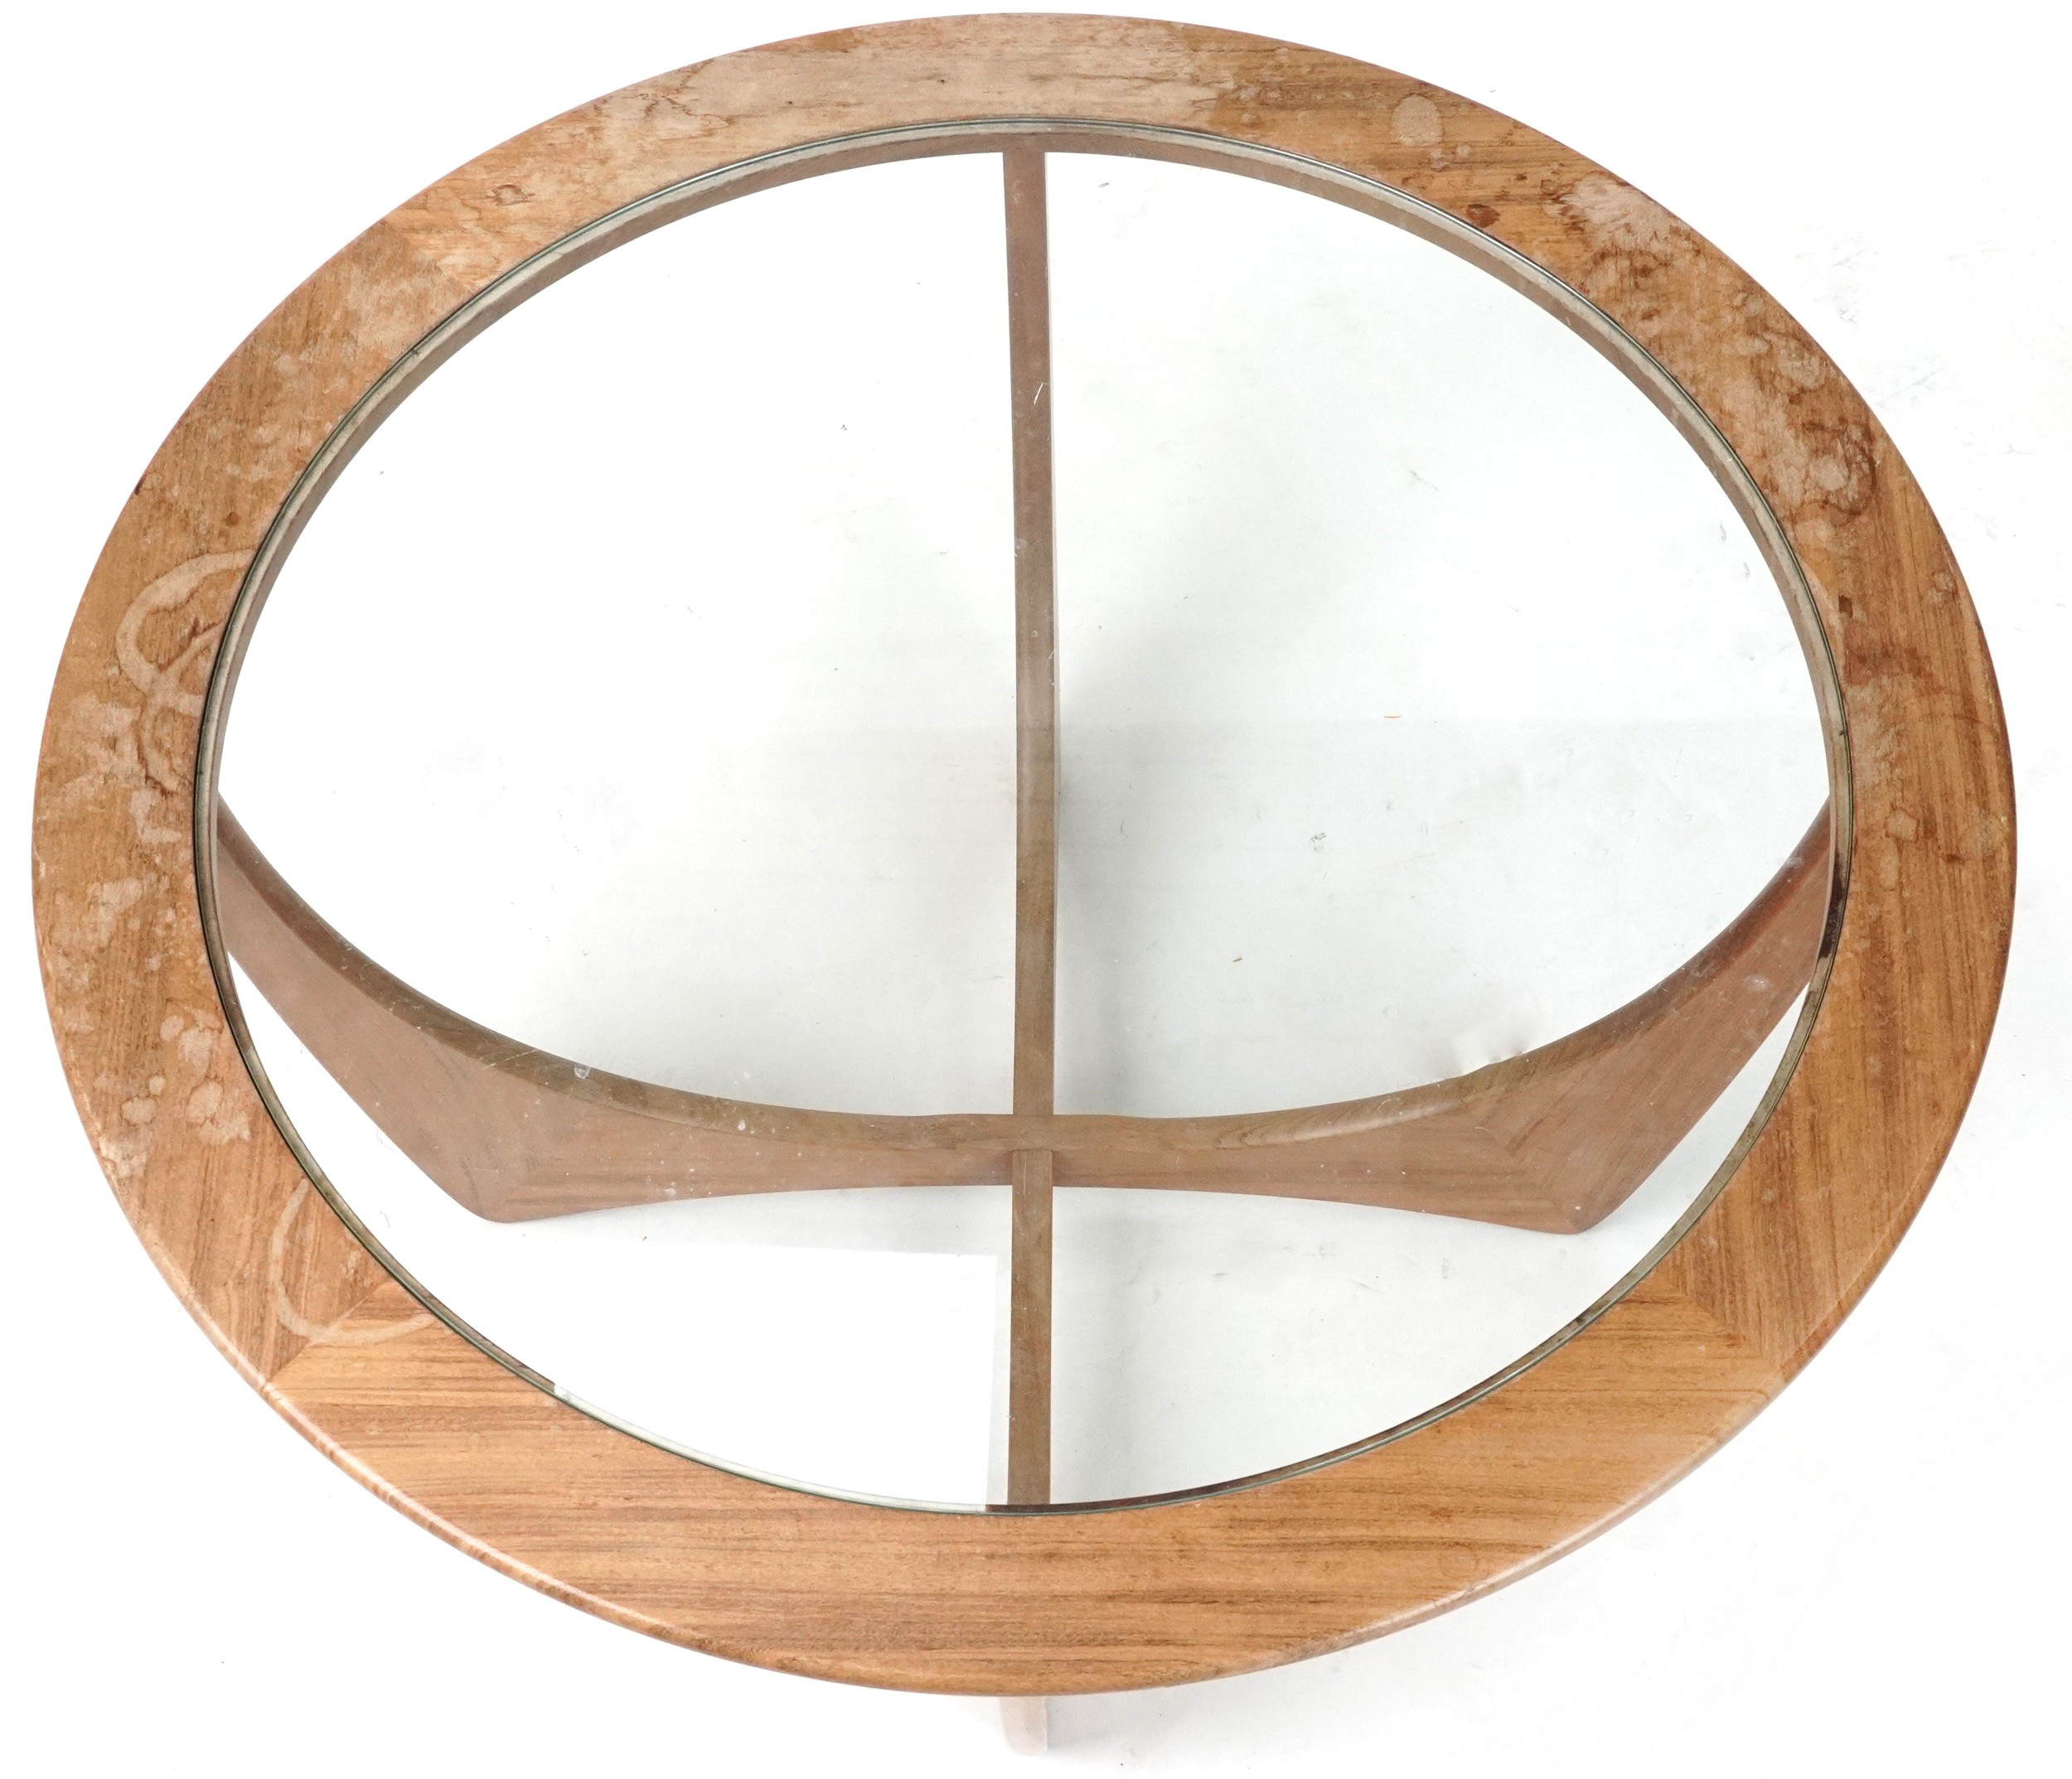 G Plan, mid century teak Astro coffee table, 46cm high x 84cm in diameter - Image 2 of 4